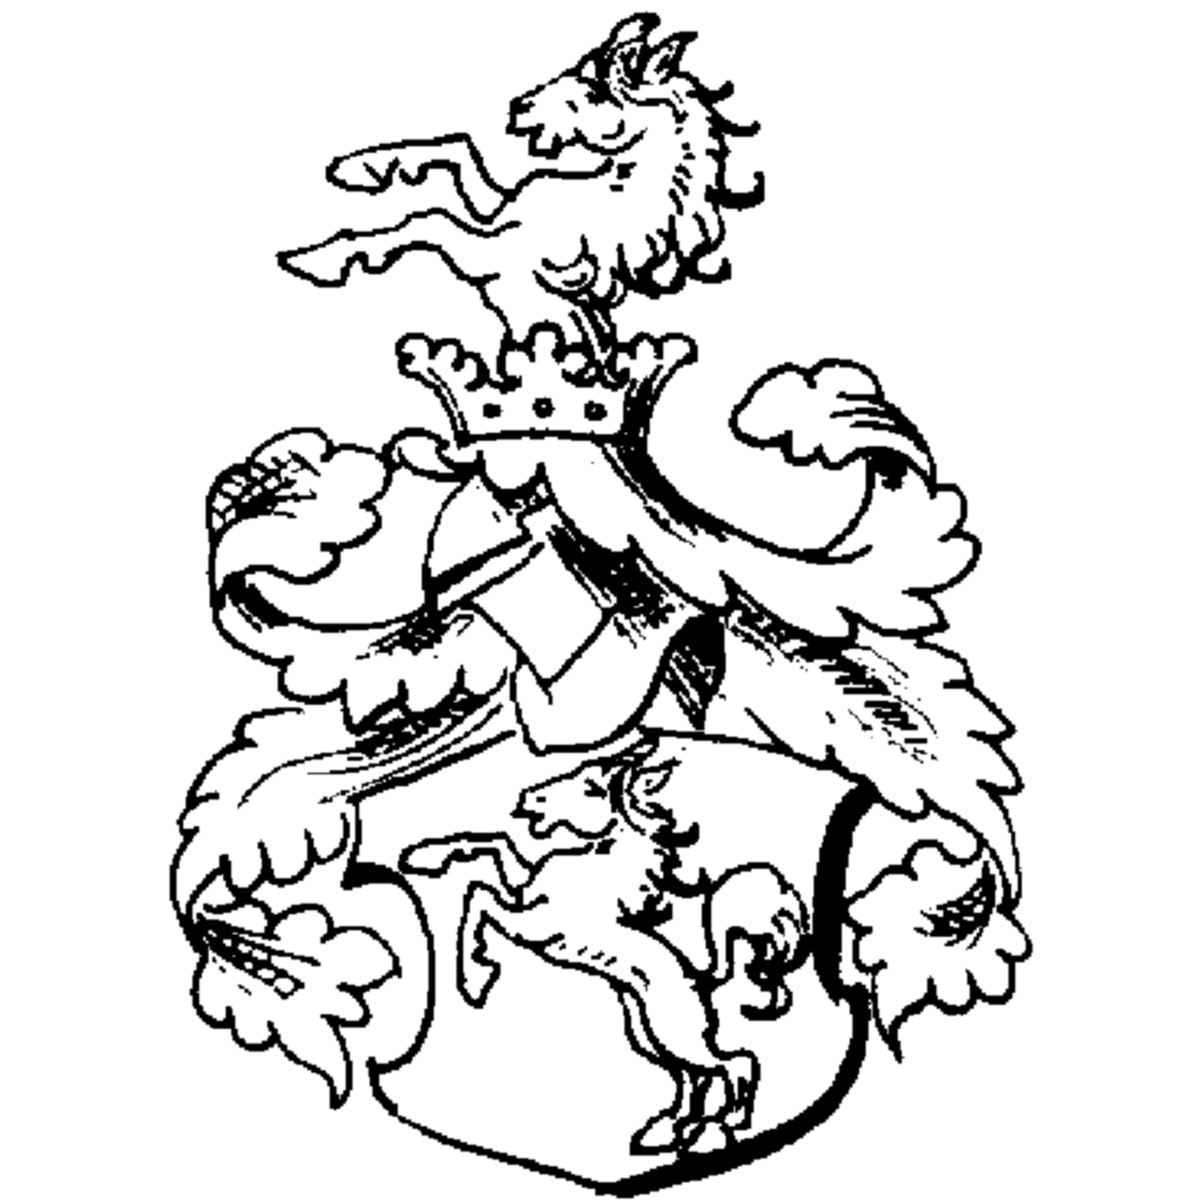 Wappen der Familie Bonwart